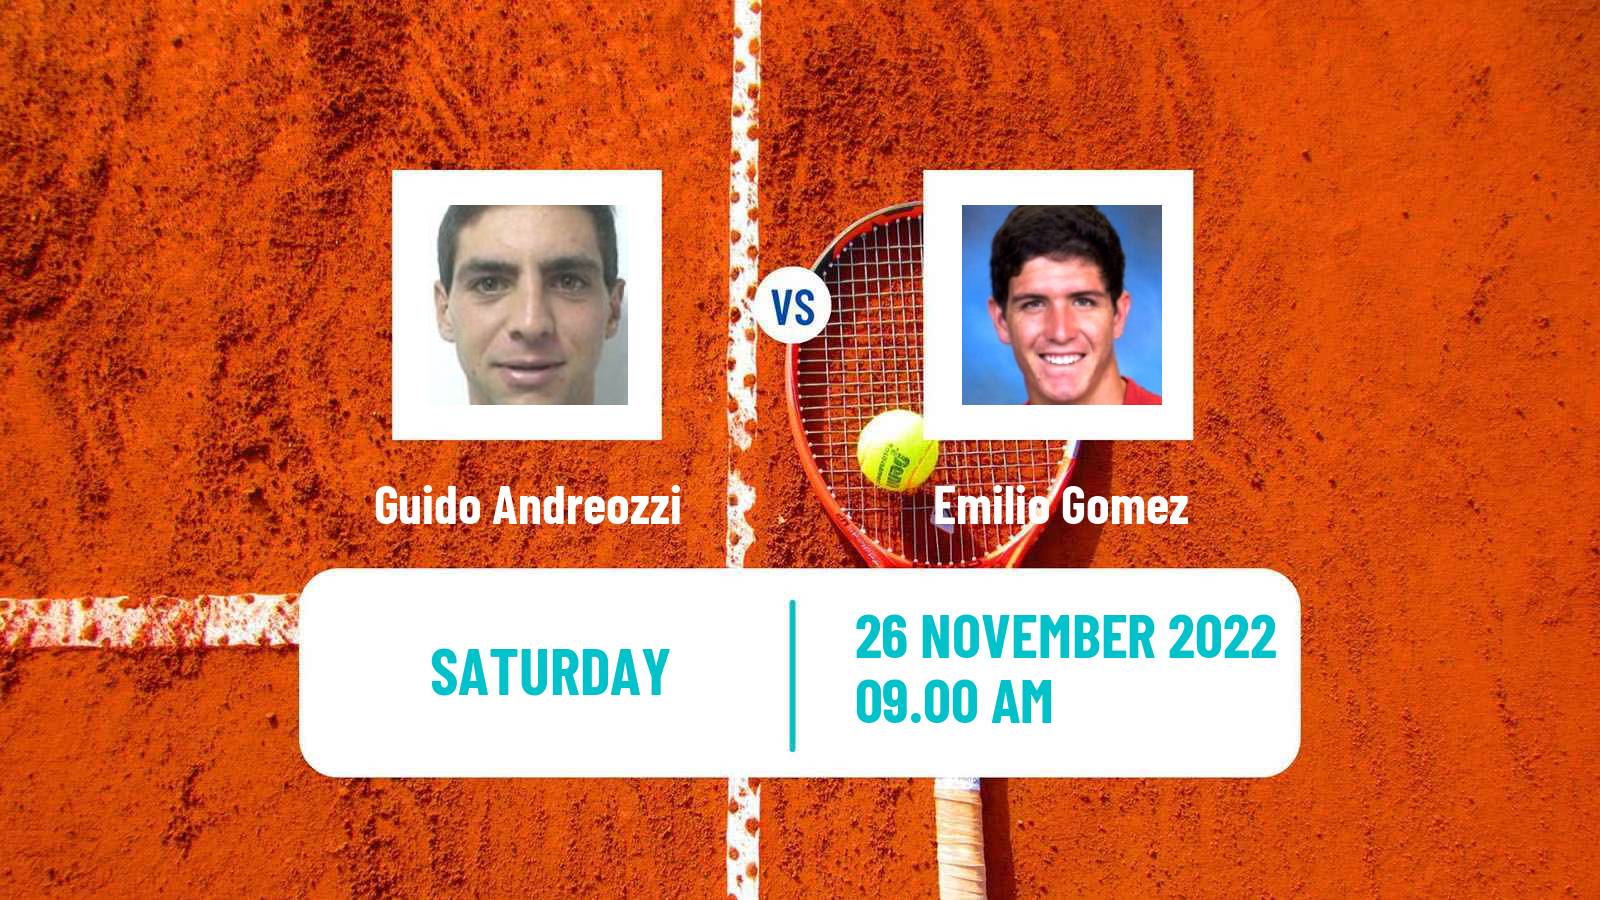 Tennis ATP Challenger Guido Andreozzi - Emilio Gomez